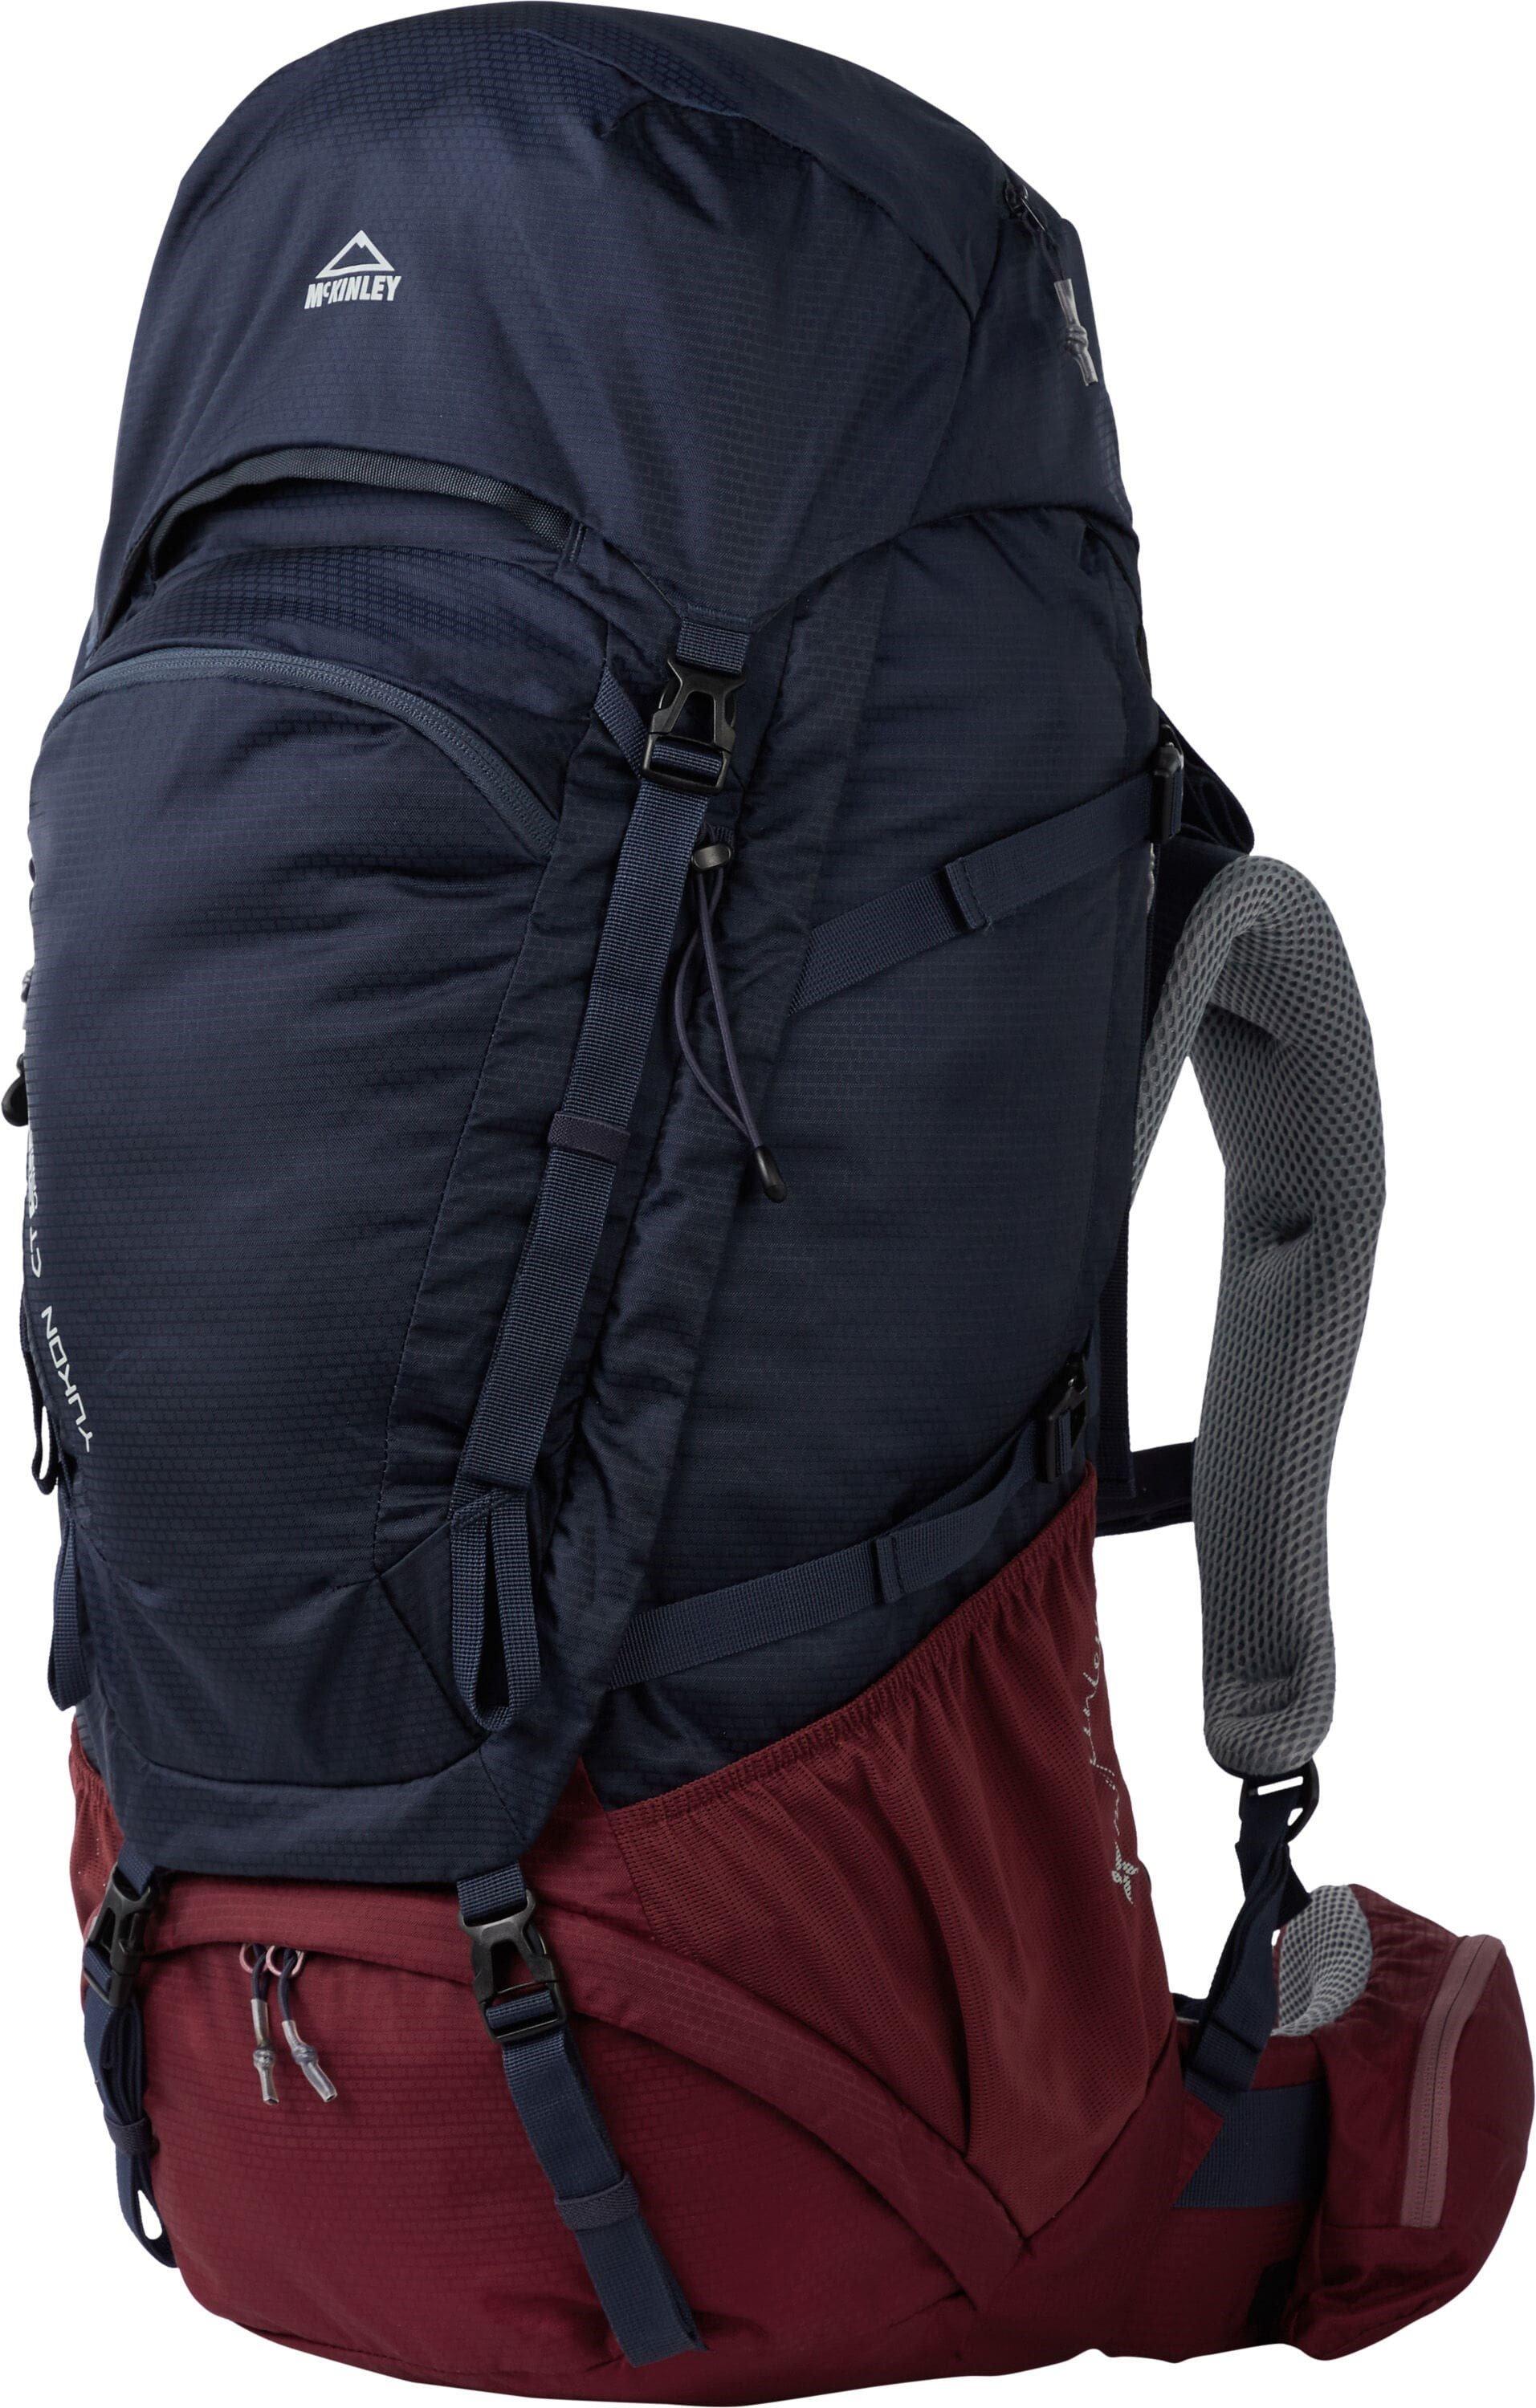 McKinley Yukon CT 50W+10 Trekking Backpack W Velikost: Univerzální velikost